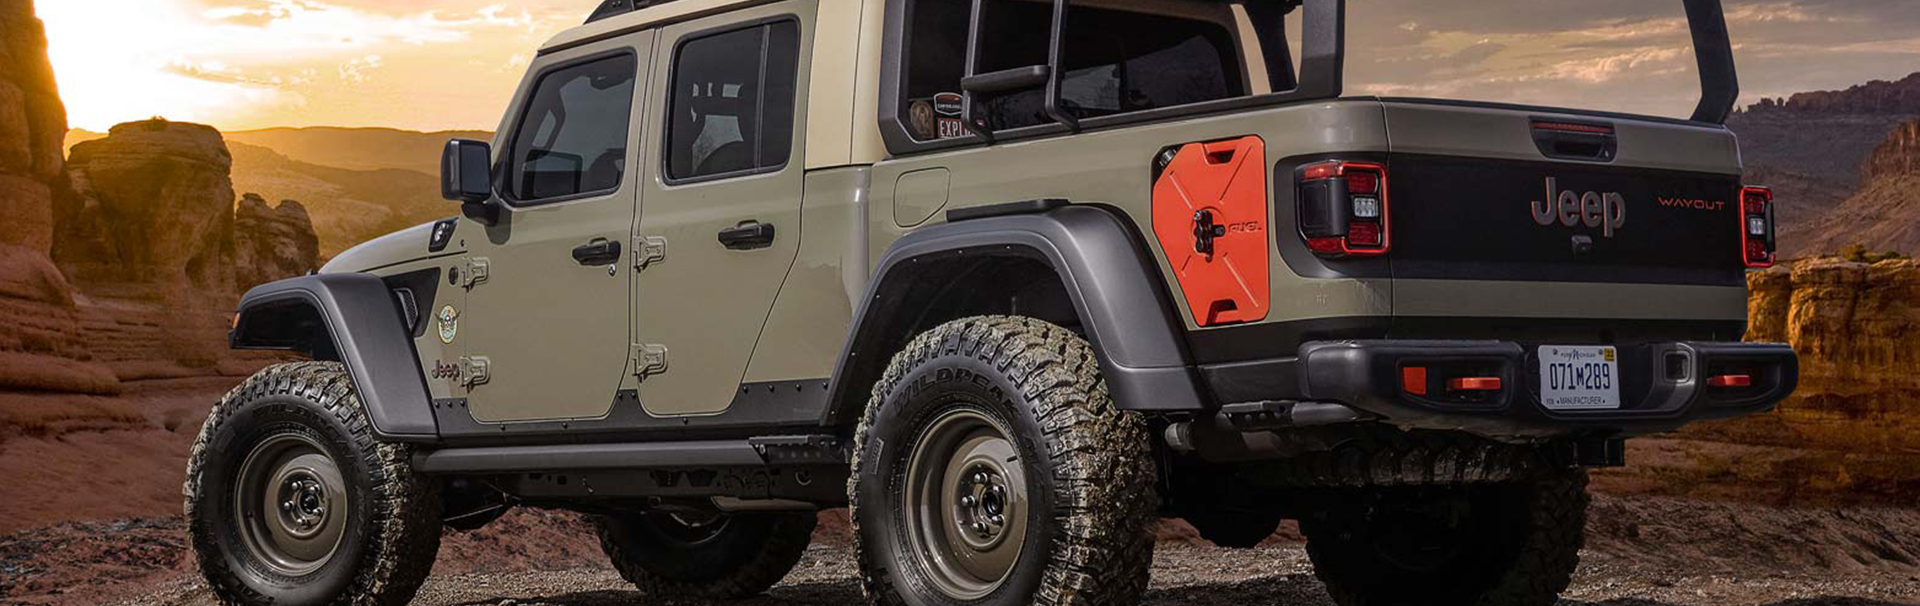 Easter Jeep Safari 2019 : 6 concepts autour du Jeep Gladiator